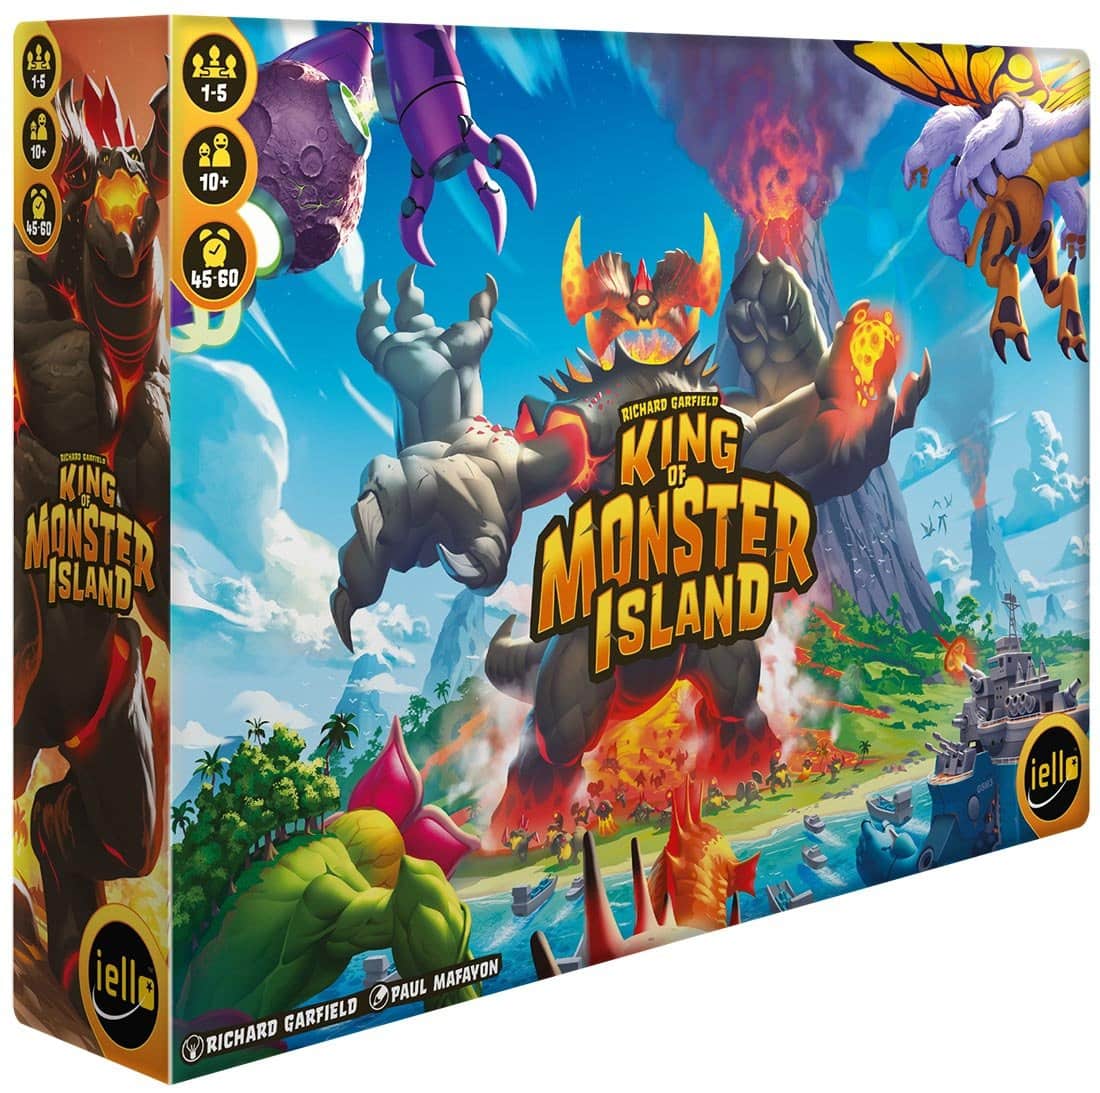 DEL70028 001 - King of Monster Island